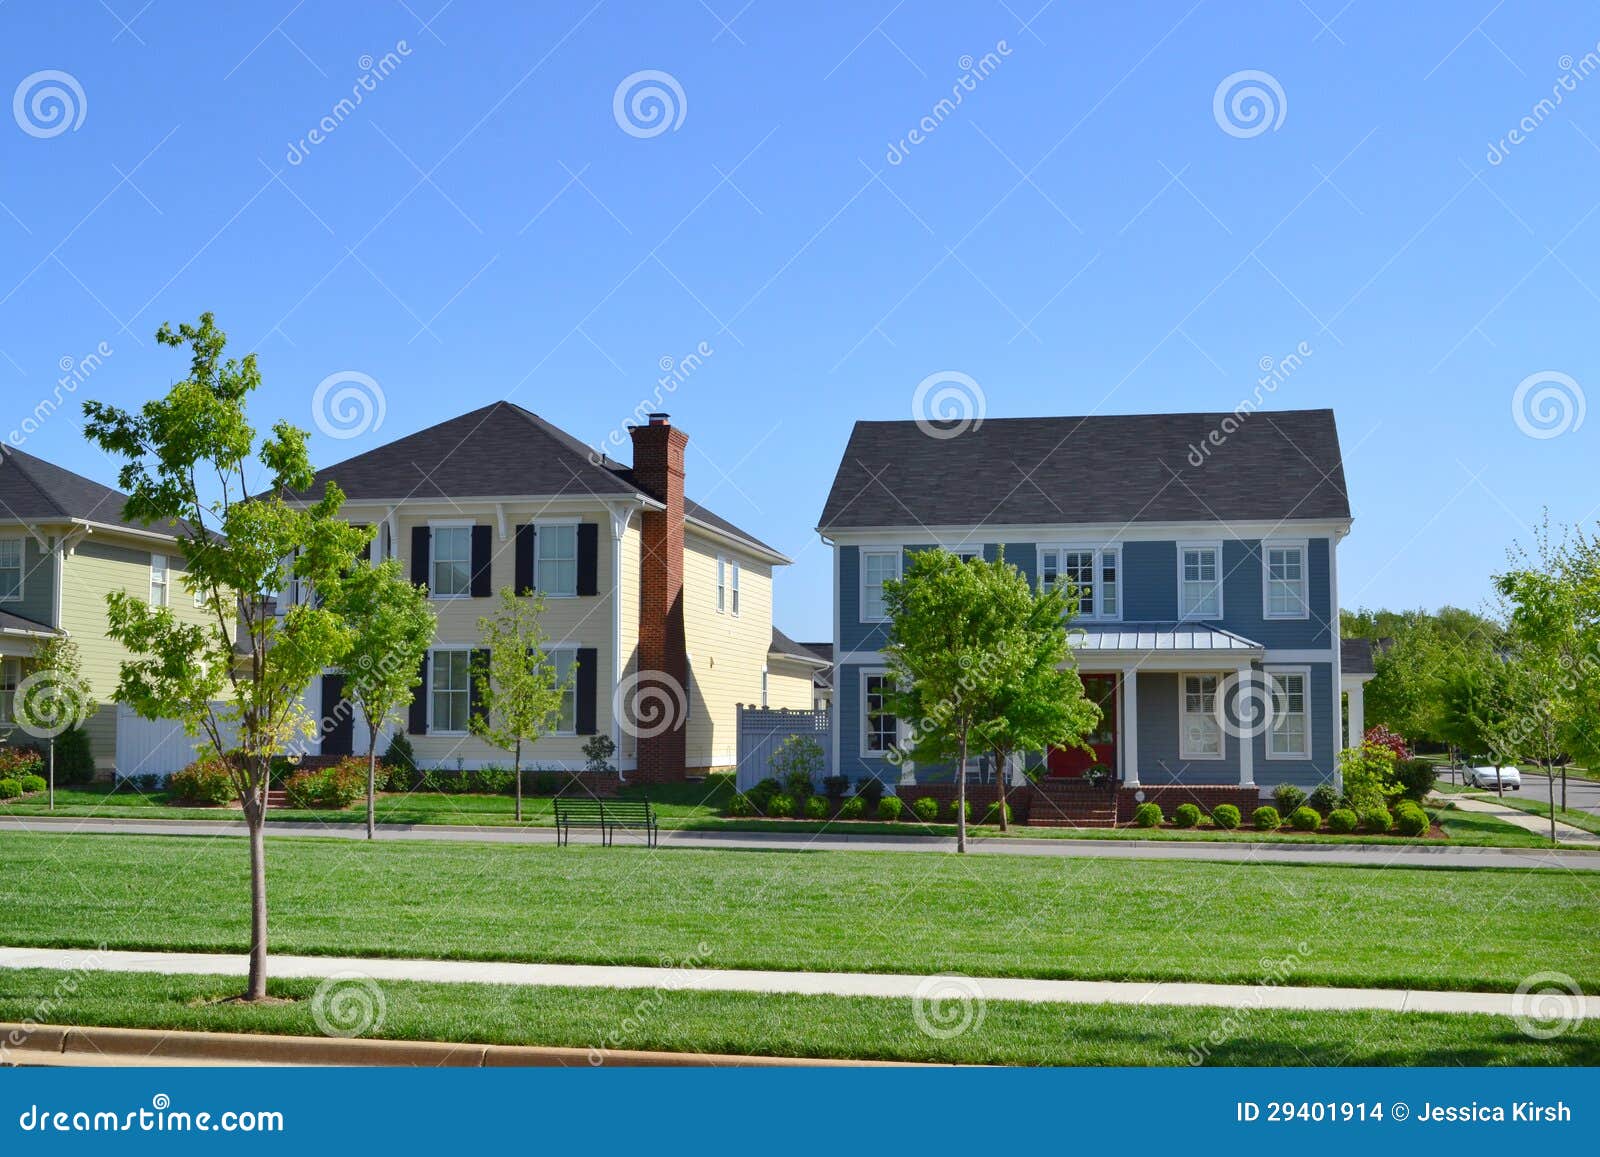 brand new capecod suburban american dream home neighborhood